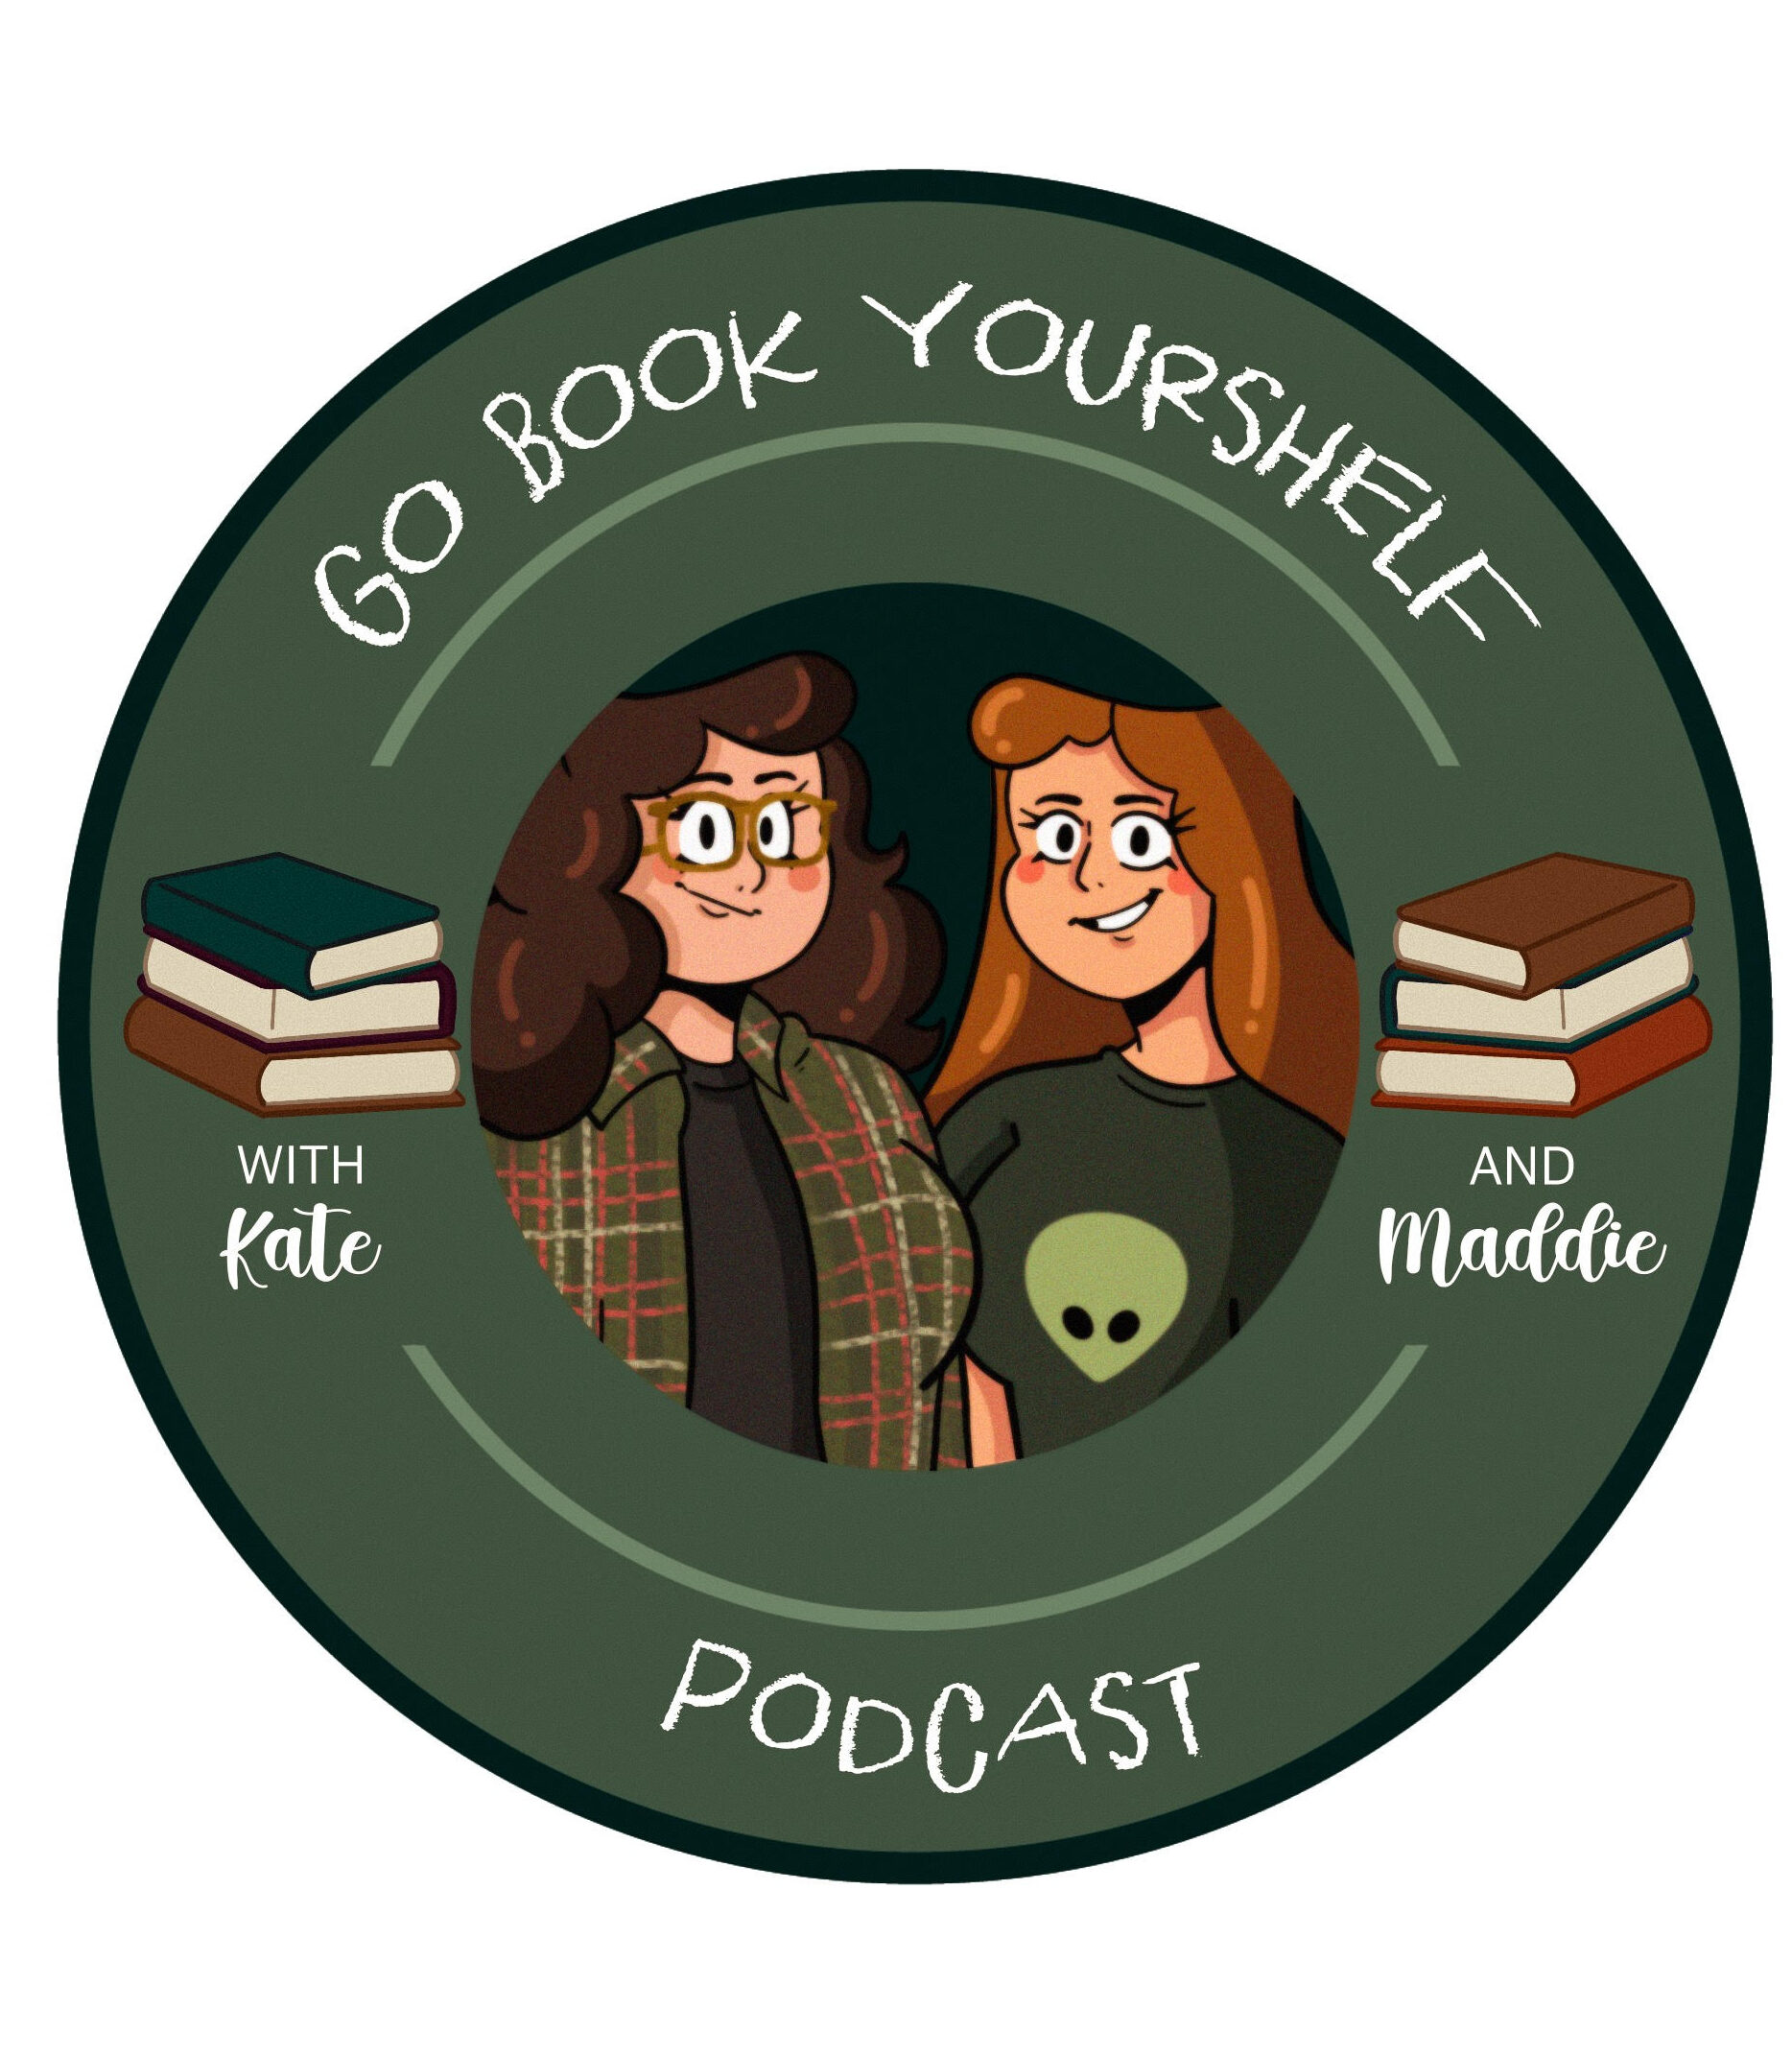 Go Book Yourshelf Podcast